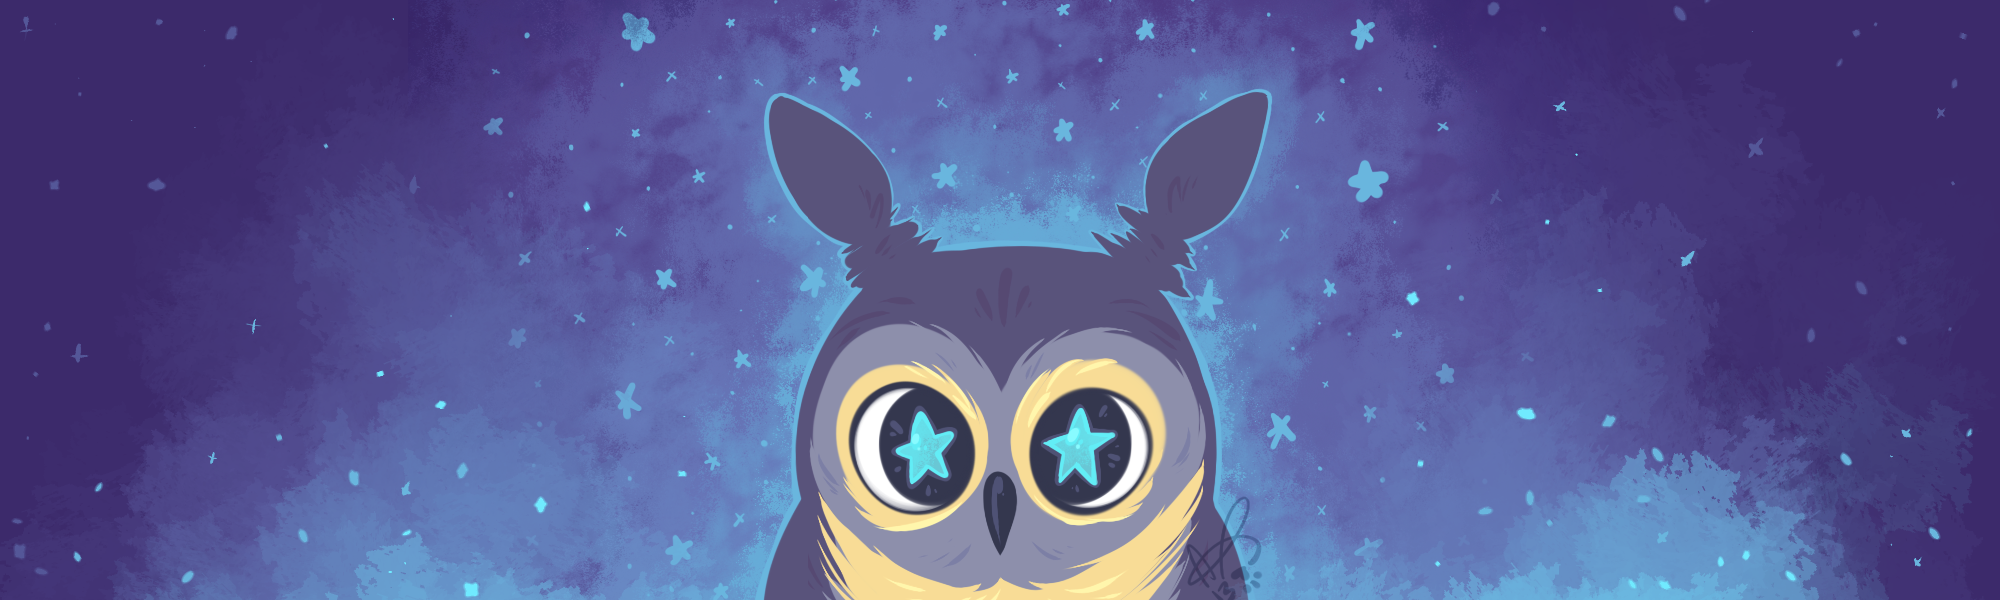 Starry Eyes Owl